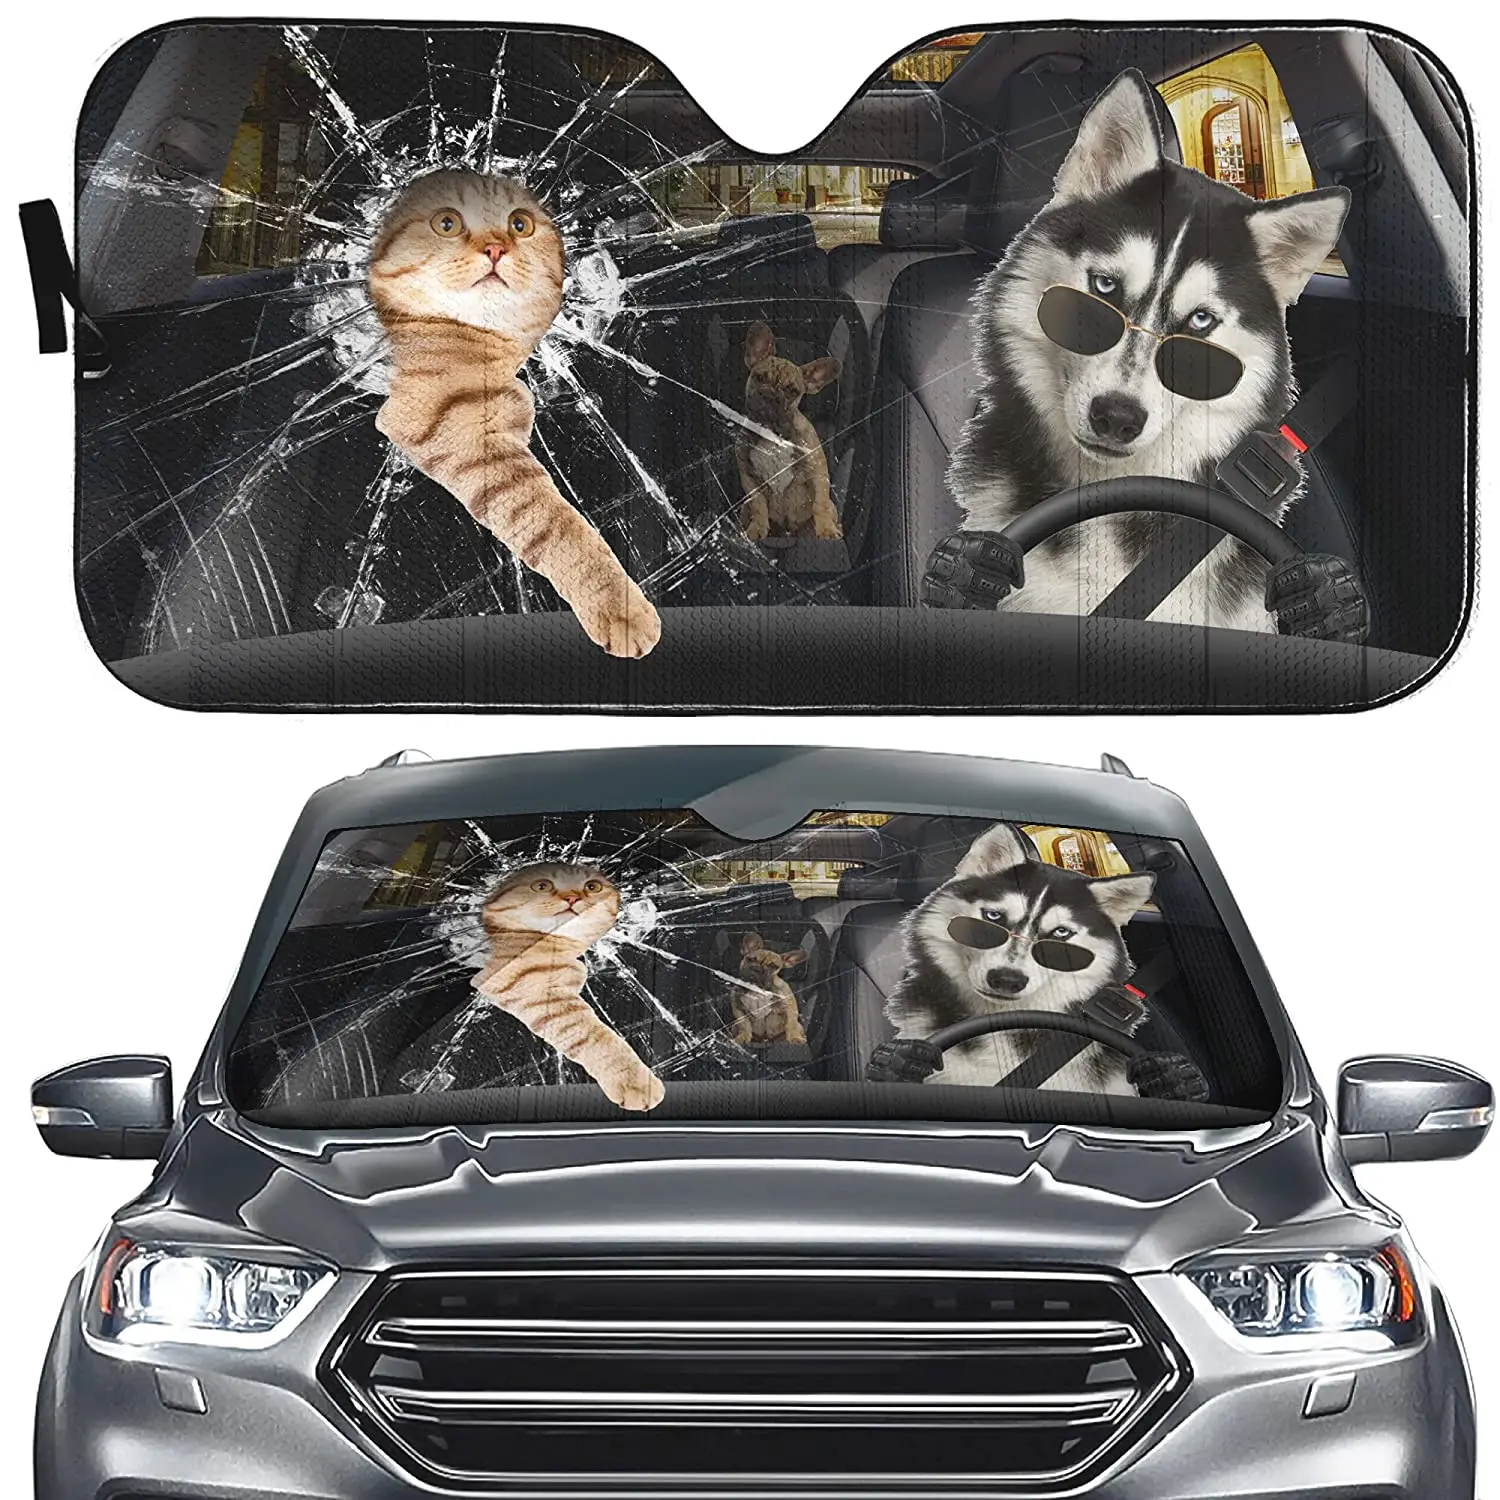 

YOSA Husky Dog Driver Auto Sun Shade, Car Windshield Sunshade Visor Protector, Funny Animal Shade Front Window Decor Truck Keep